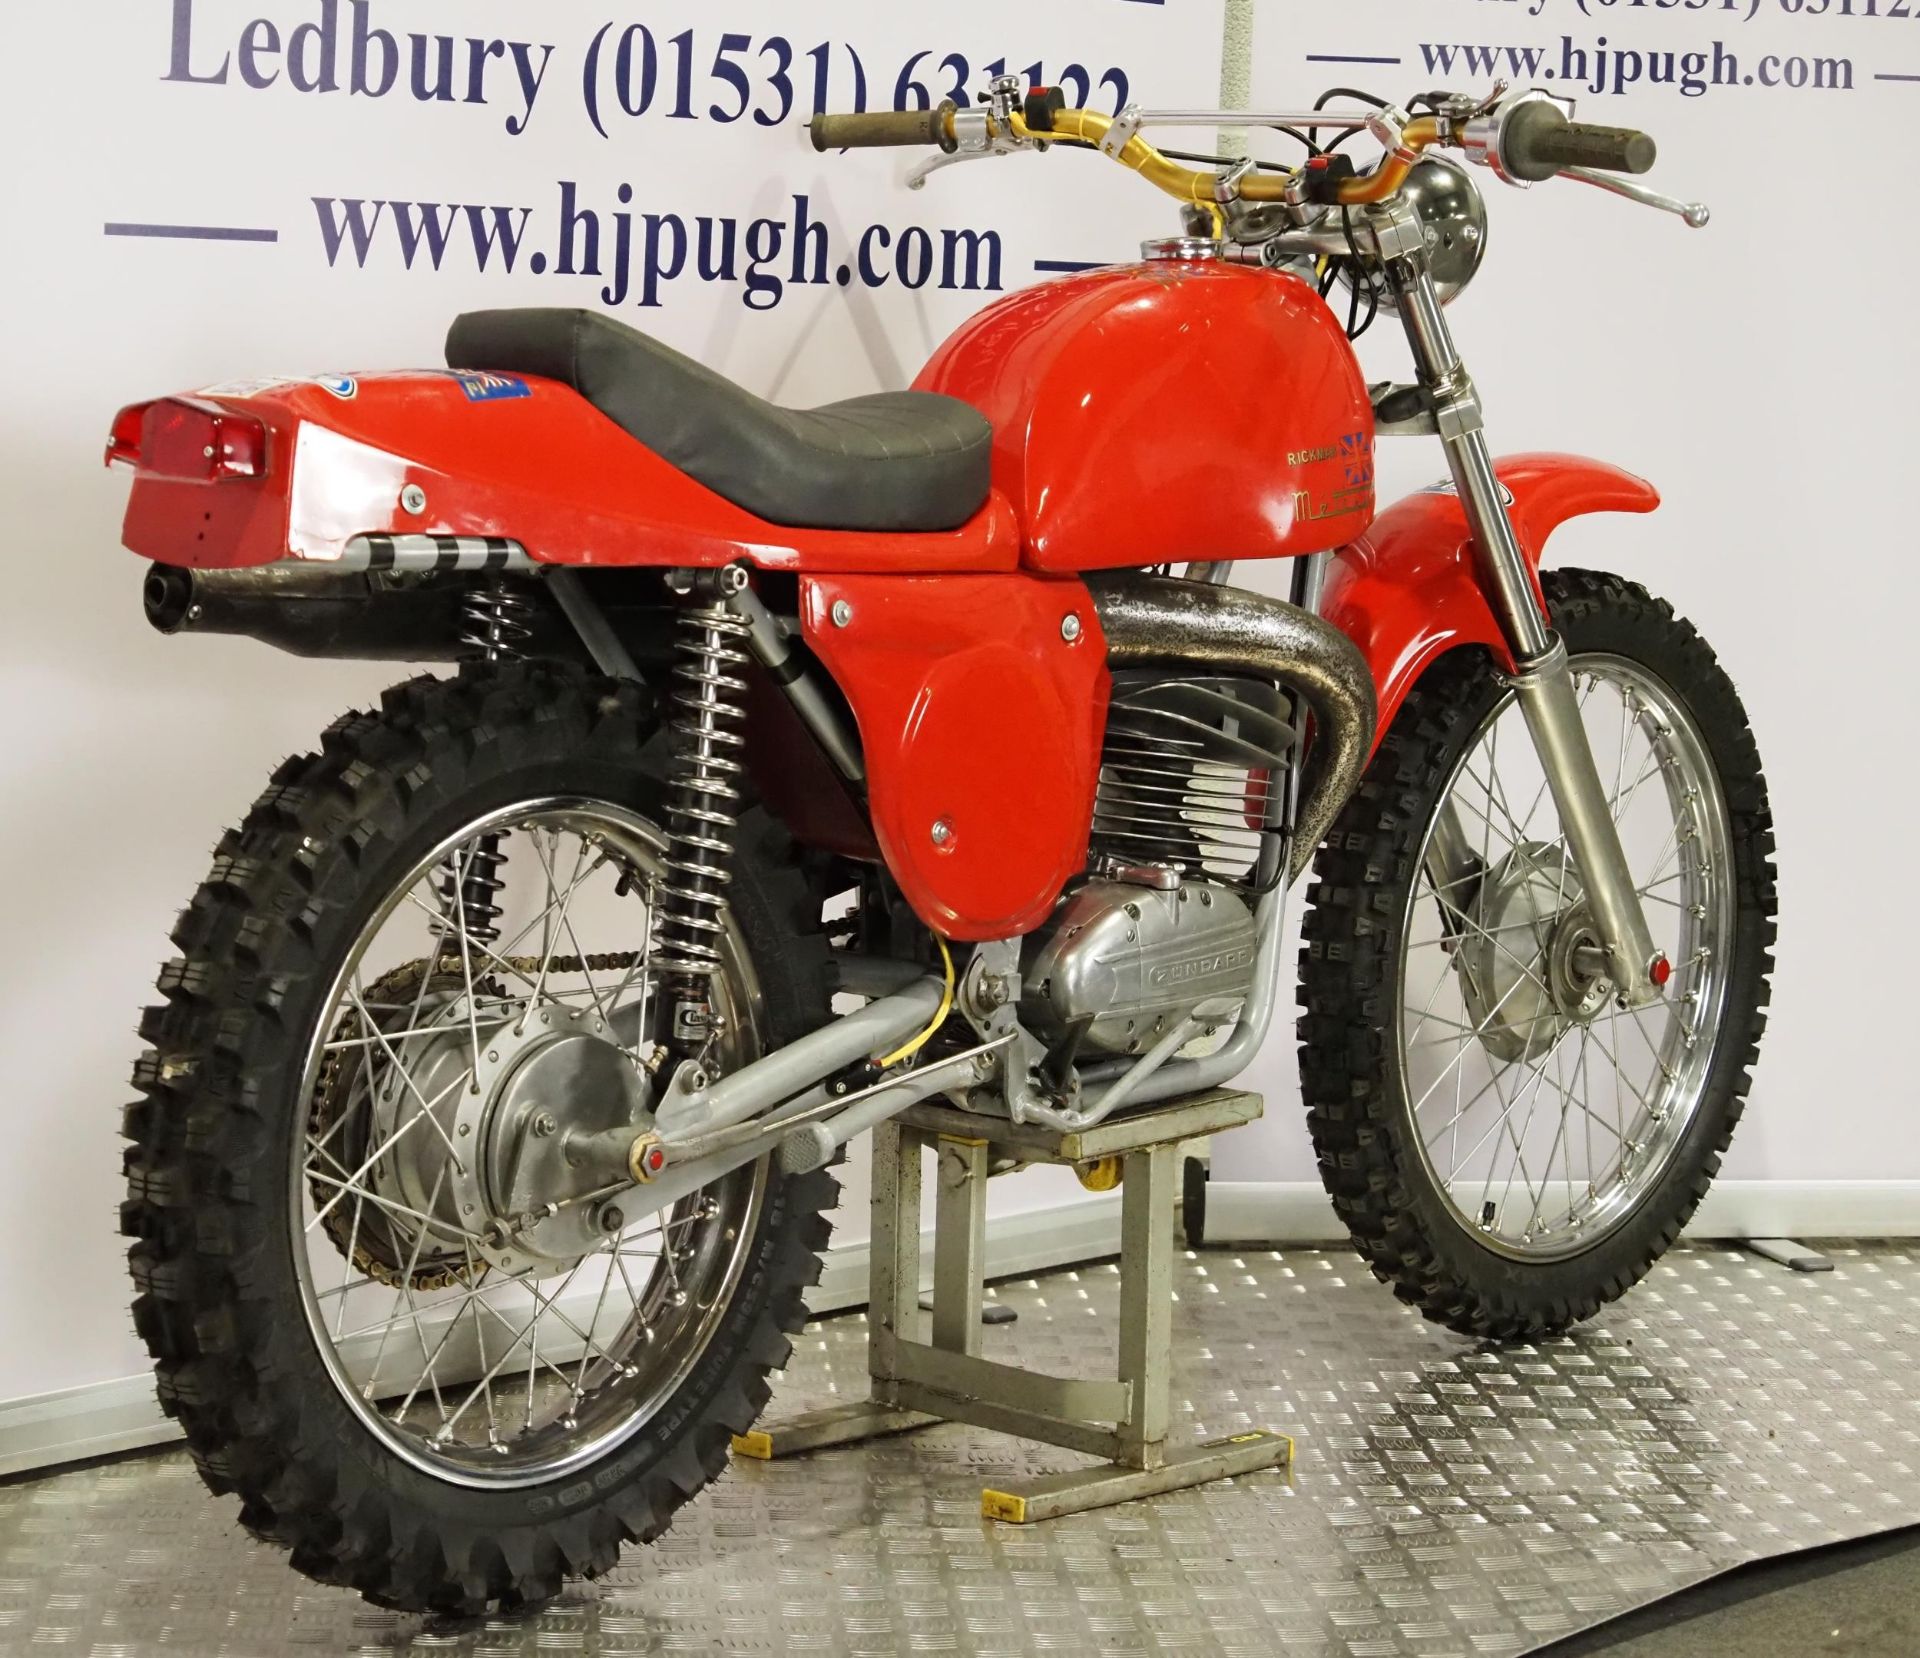 Rickman Metisse Zundap trials motorcycle. 1975. 175cc Engine No. 4648327 Runs and last ridden in - Image 3 of 9